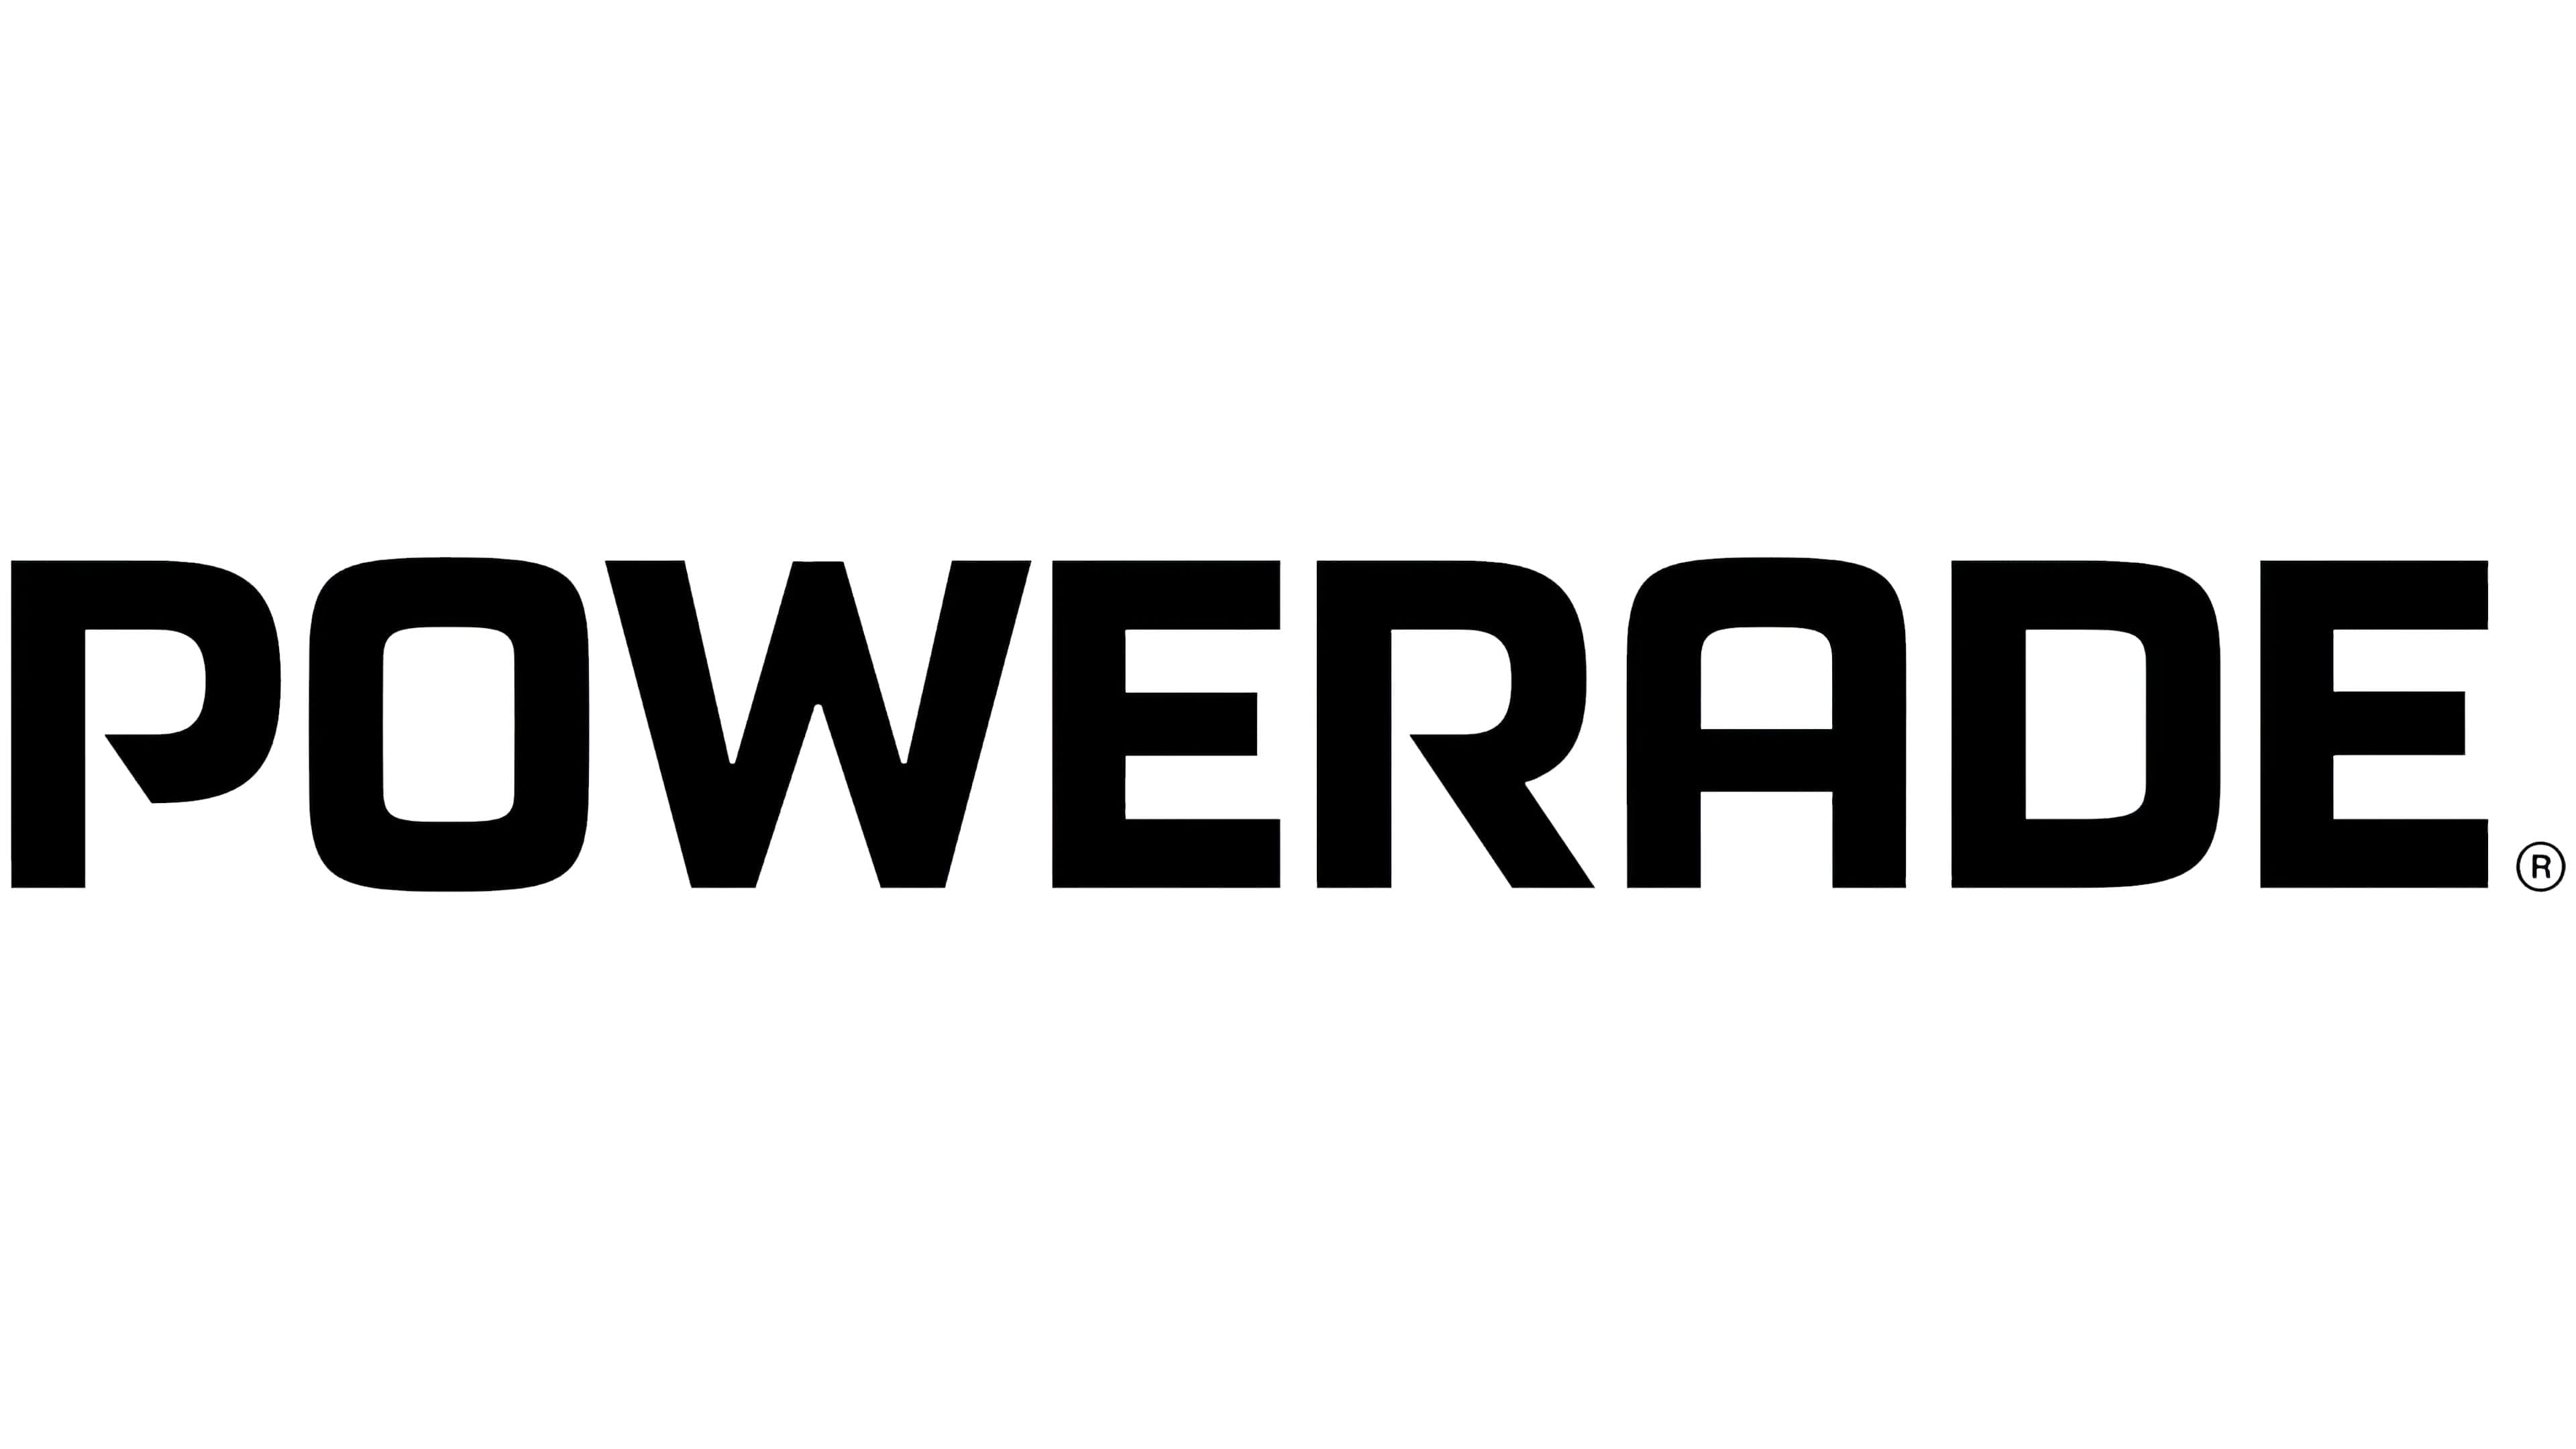 powerade zero logo 2022